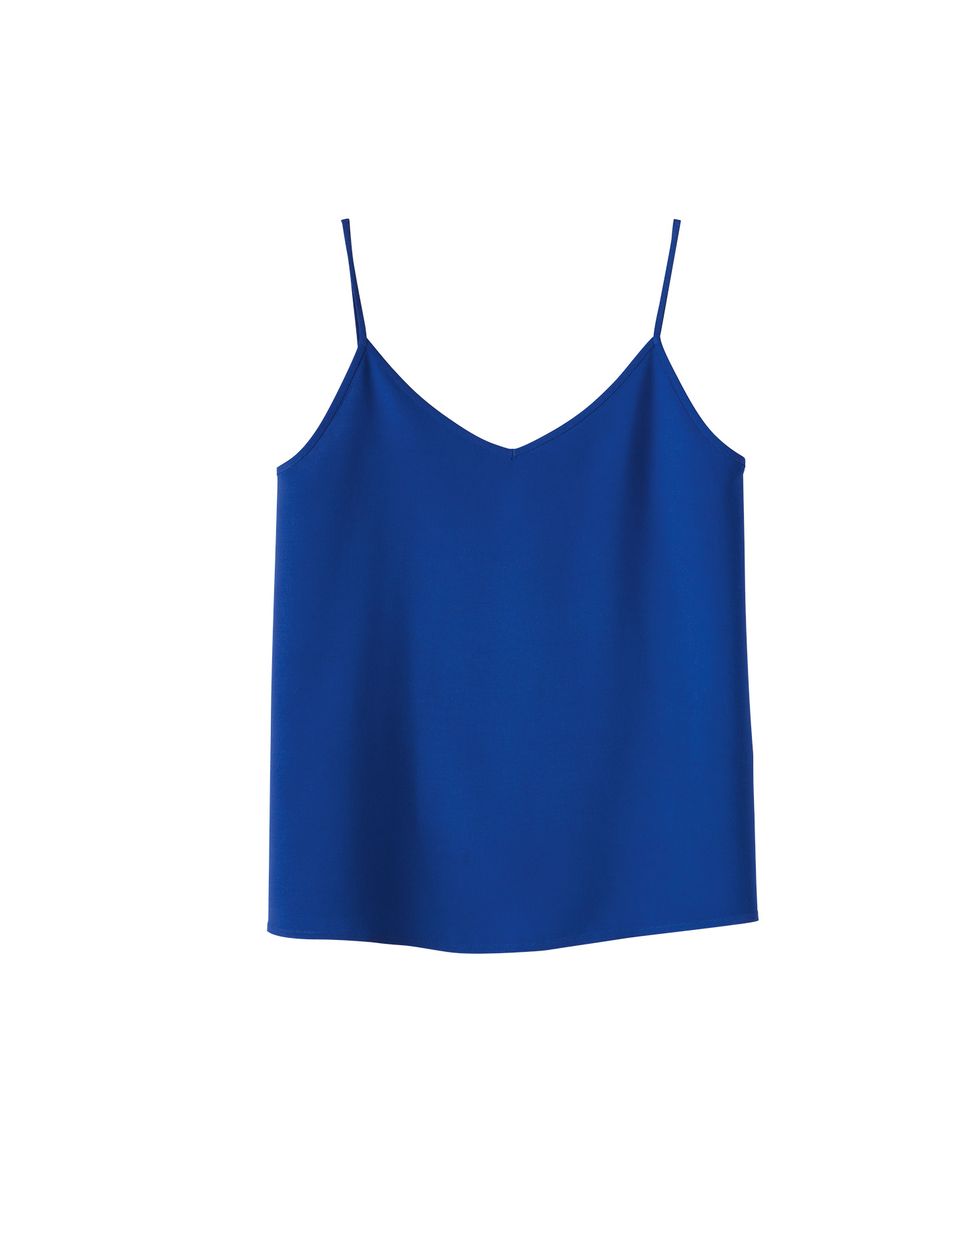 Blue, Electric blue, Azure, Cobalt blue, Active shirt, Undershirt, Active tank, 